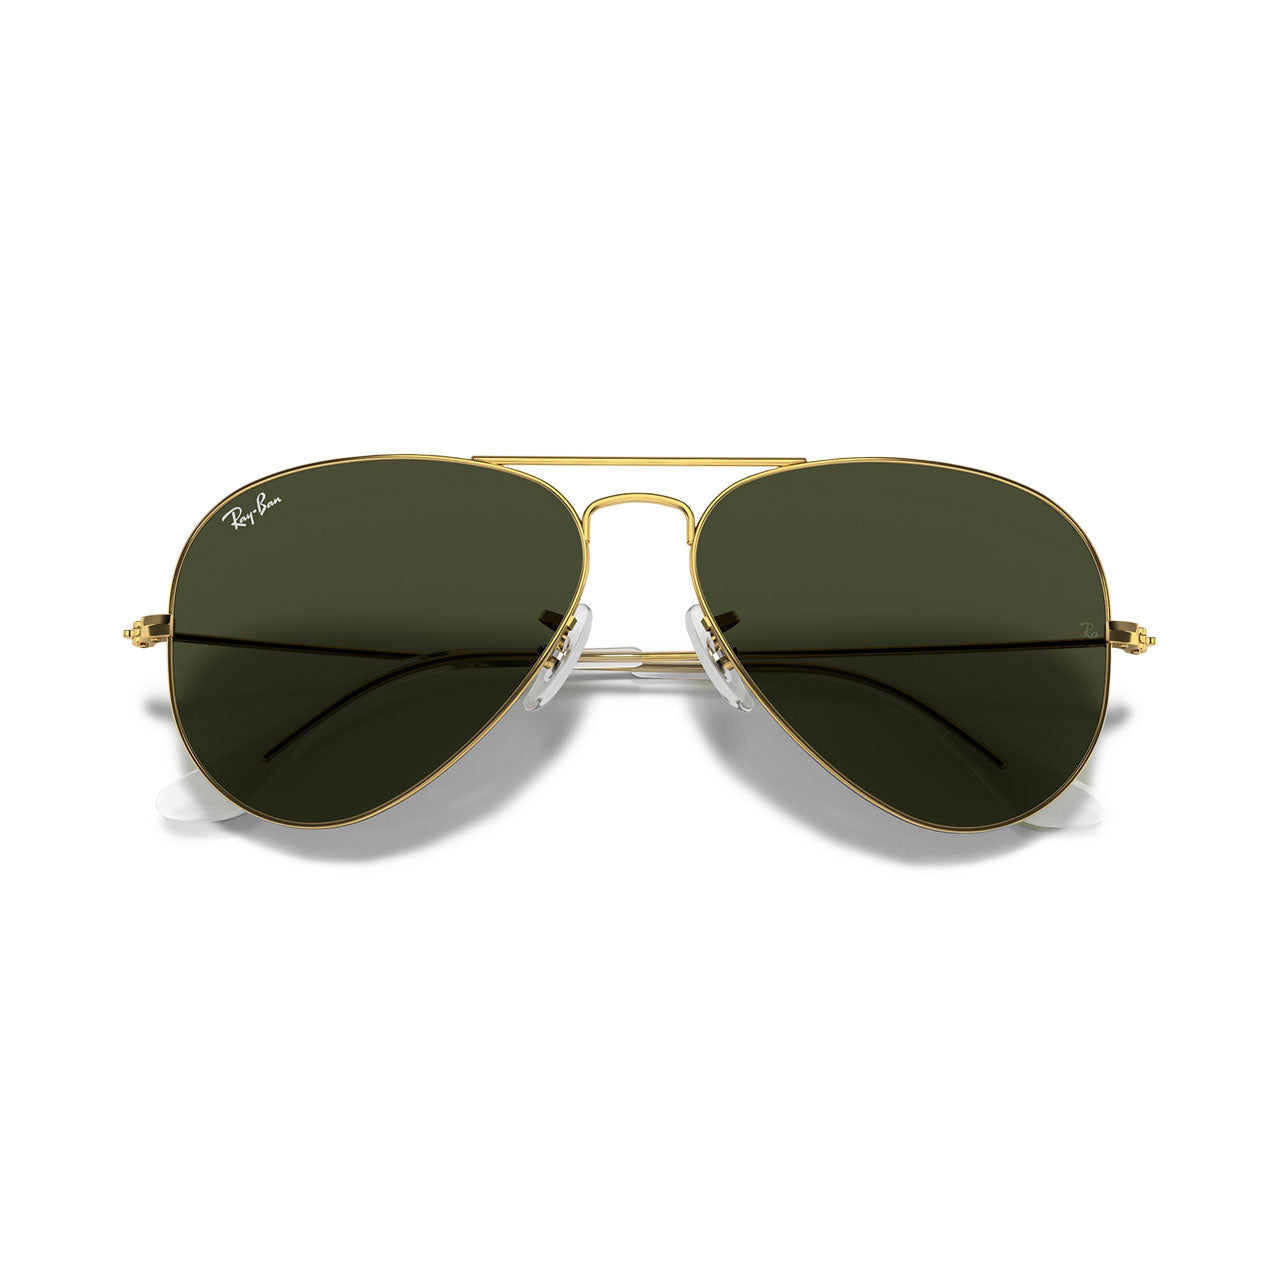 Tom Cruise's Top Gun Ray-Ban Aviator Sunglasses | Uncrate